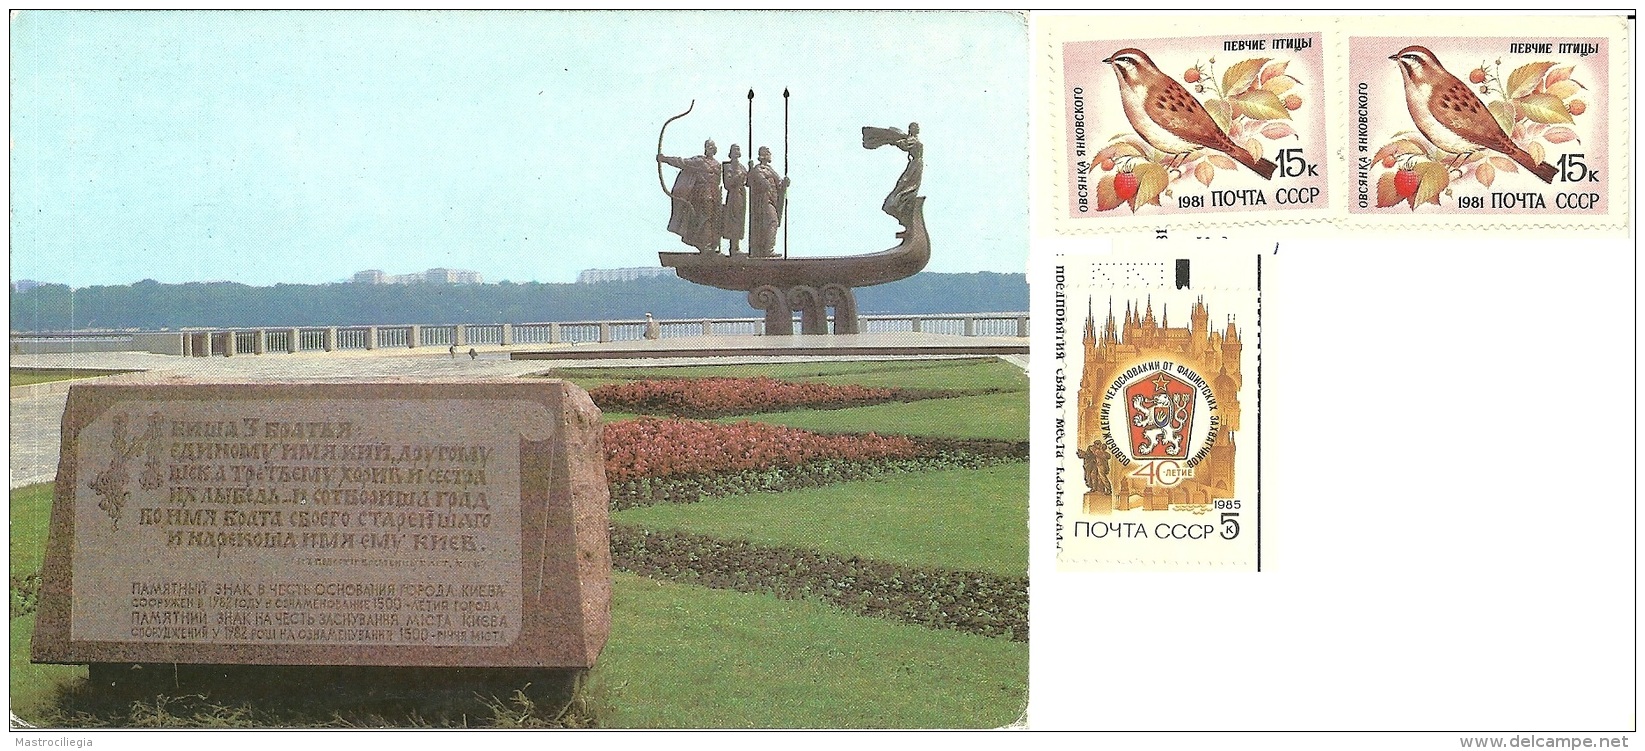 UKRAINE  UCRAINA  KIEV  Monuments In Honor Of The City´s Founding  CCCP Nice Stamps - Ucraina